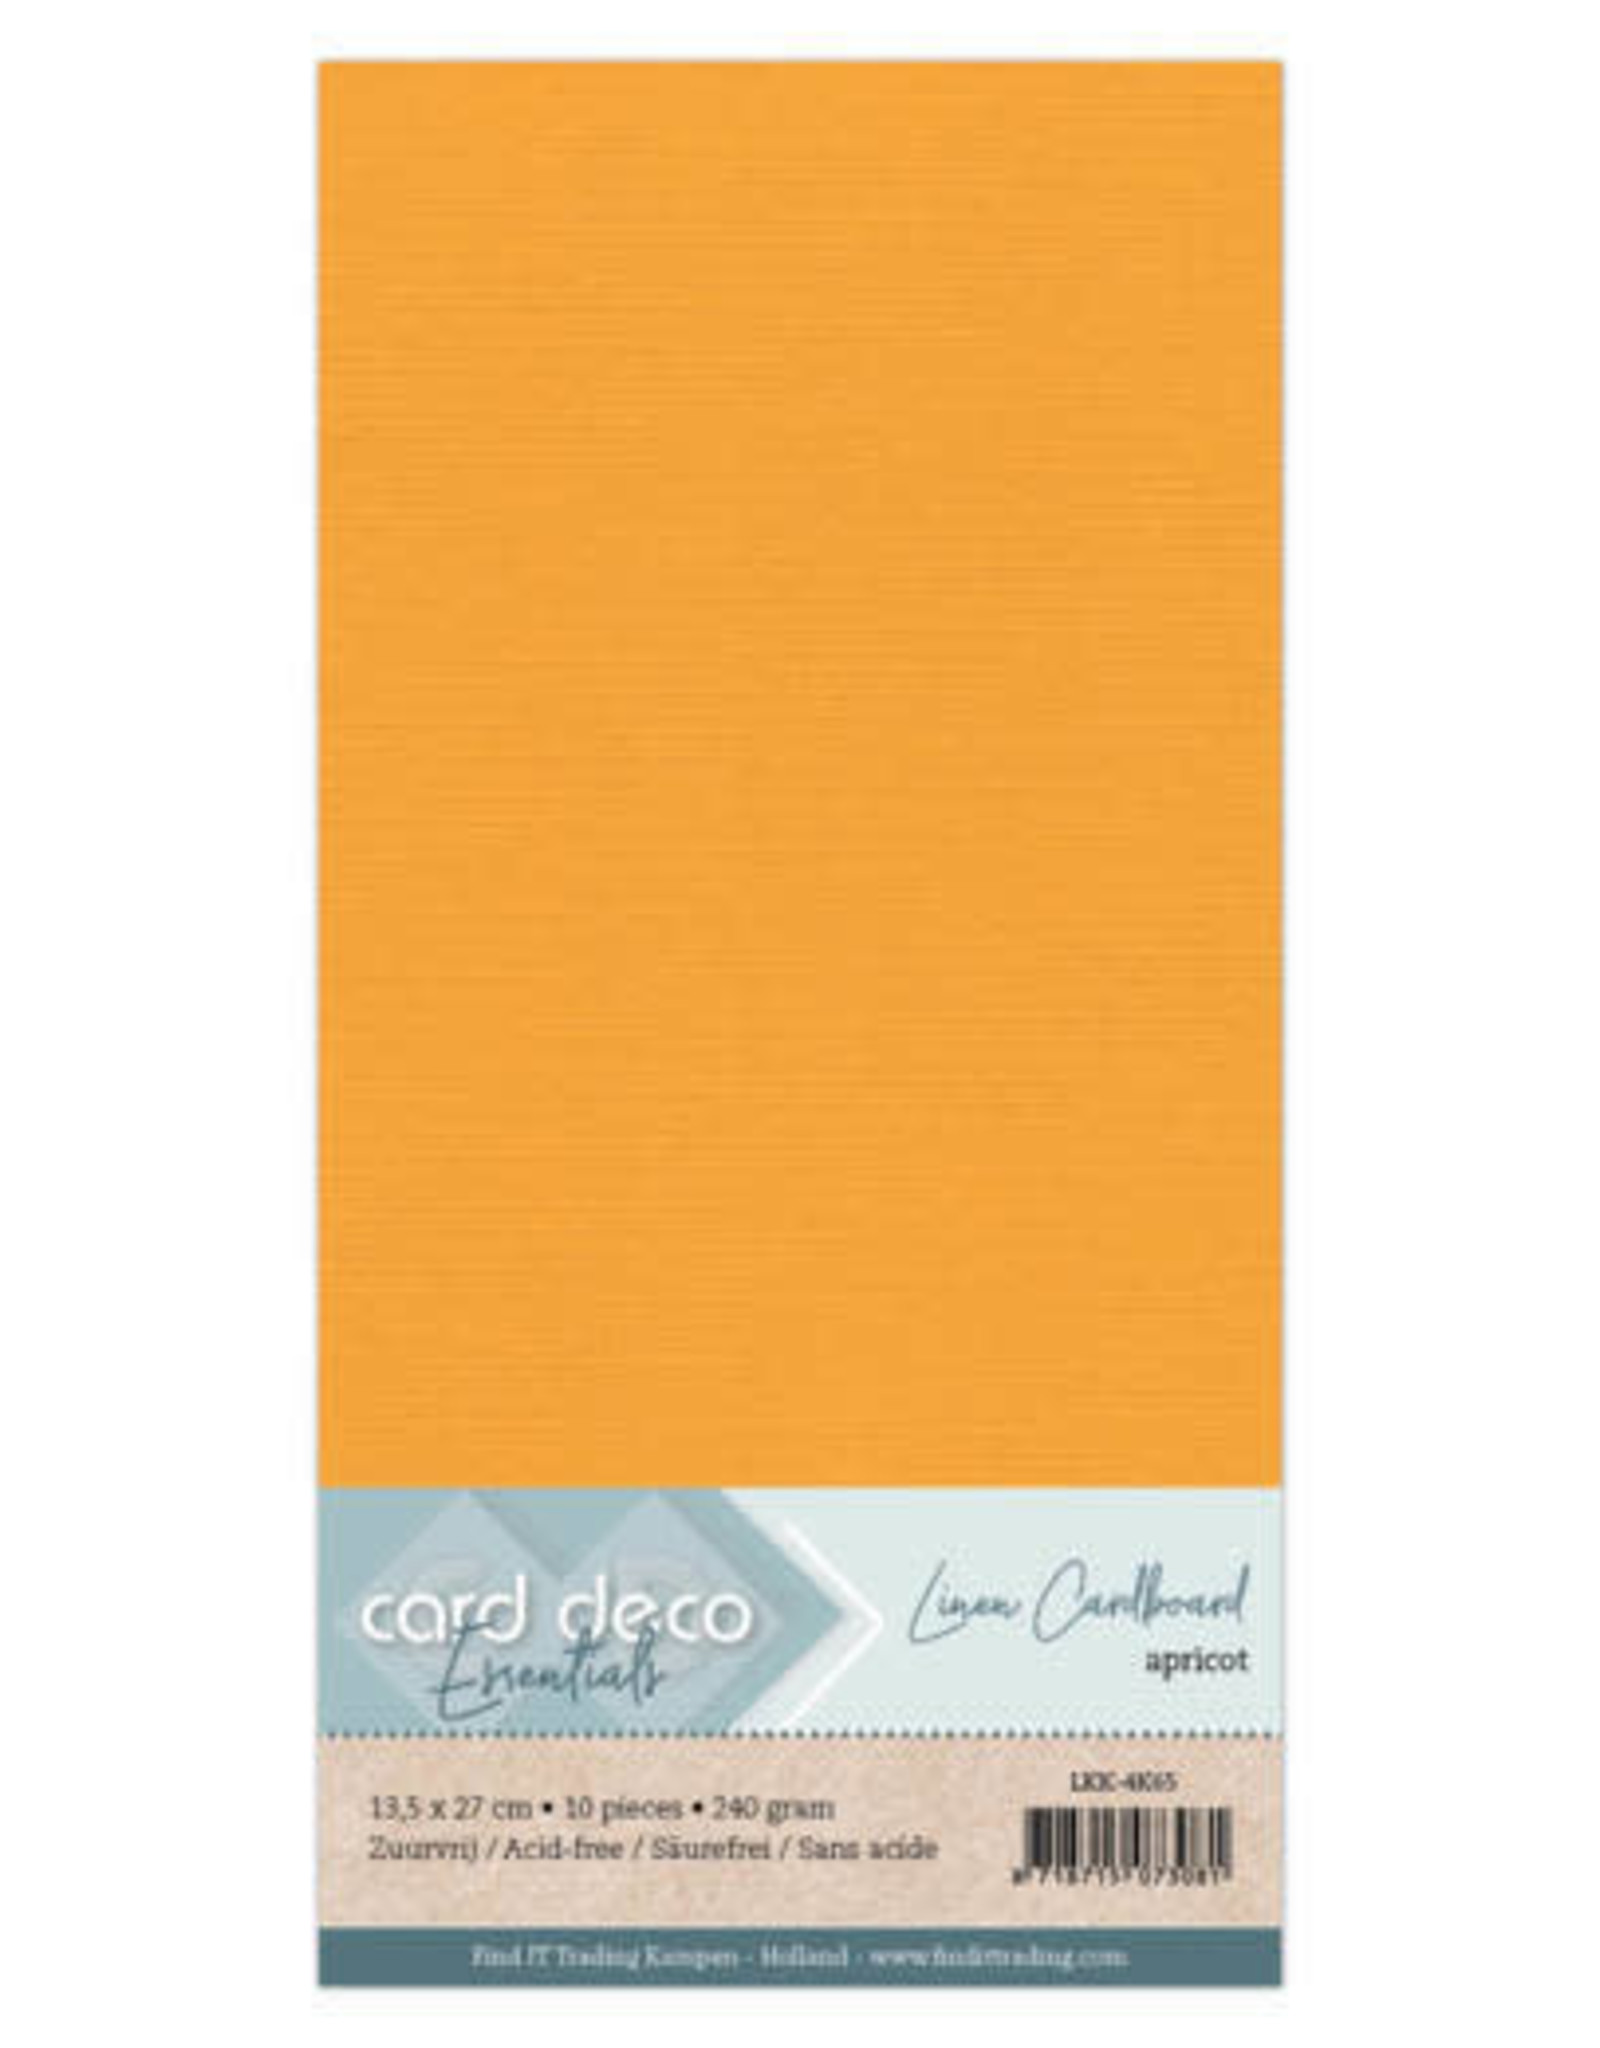 Card Deco Card Deco Linnenkarton - vierkant - Apricot  13.5 x 27 cm